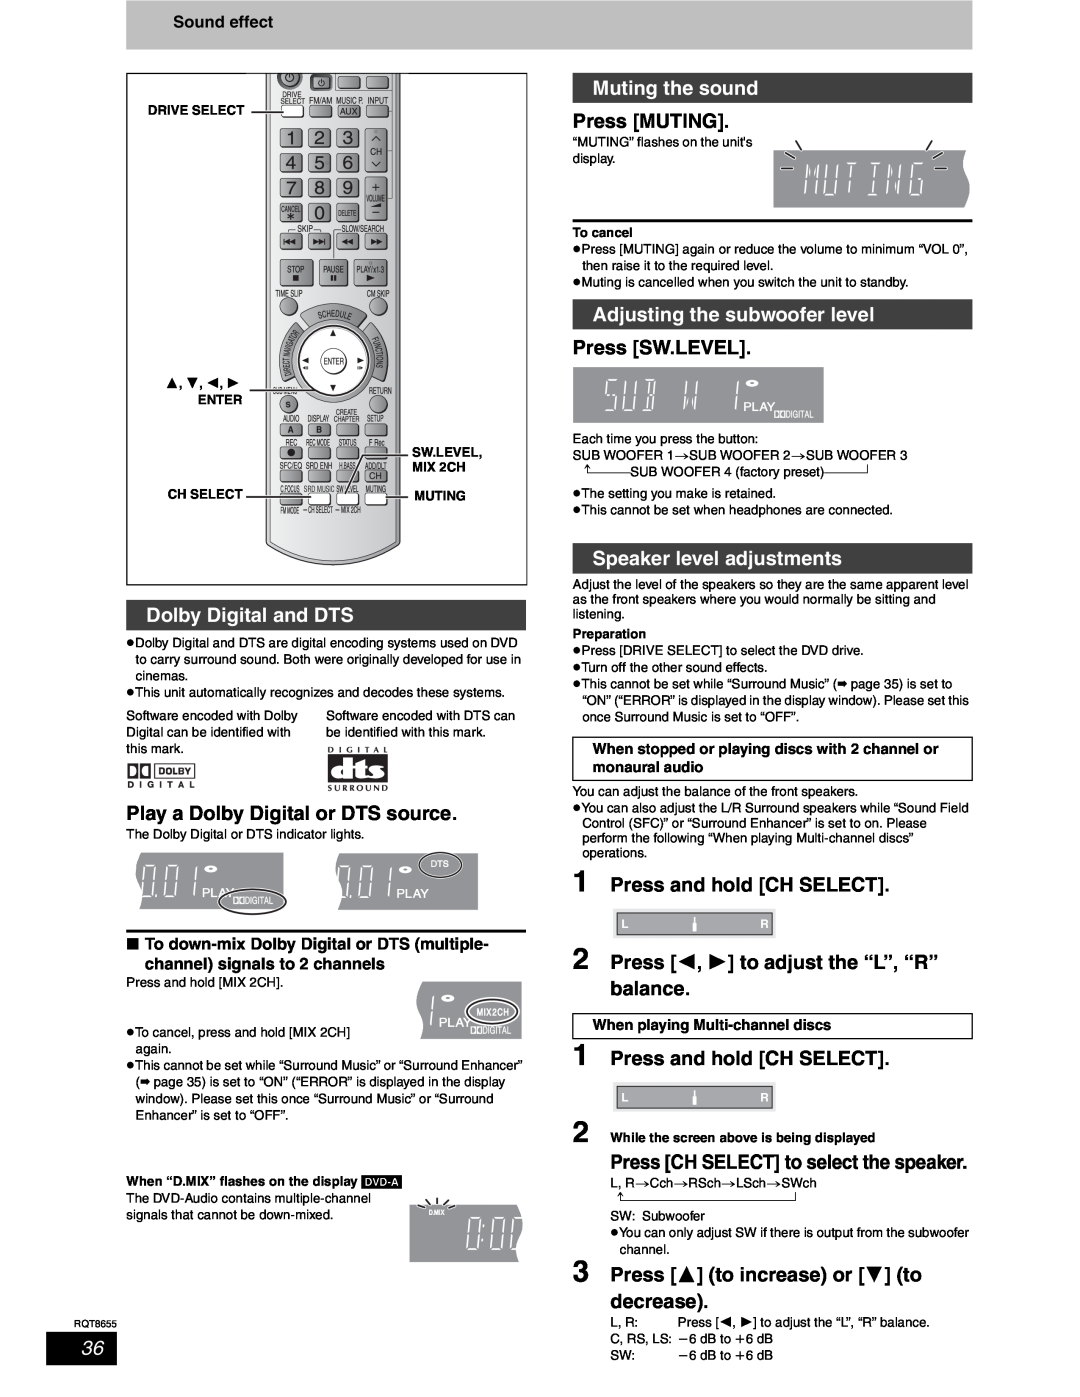 Panasonic SC-RT50 Dolby Digital and DTS, Muting the sound, Adjusting the subwoofer level, Speaker level adjustments, Press 